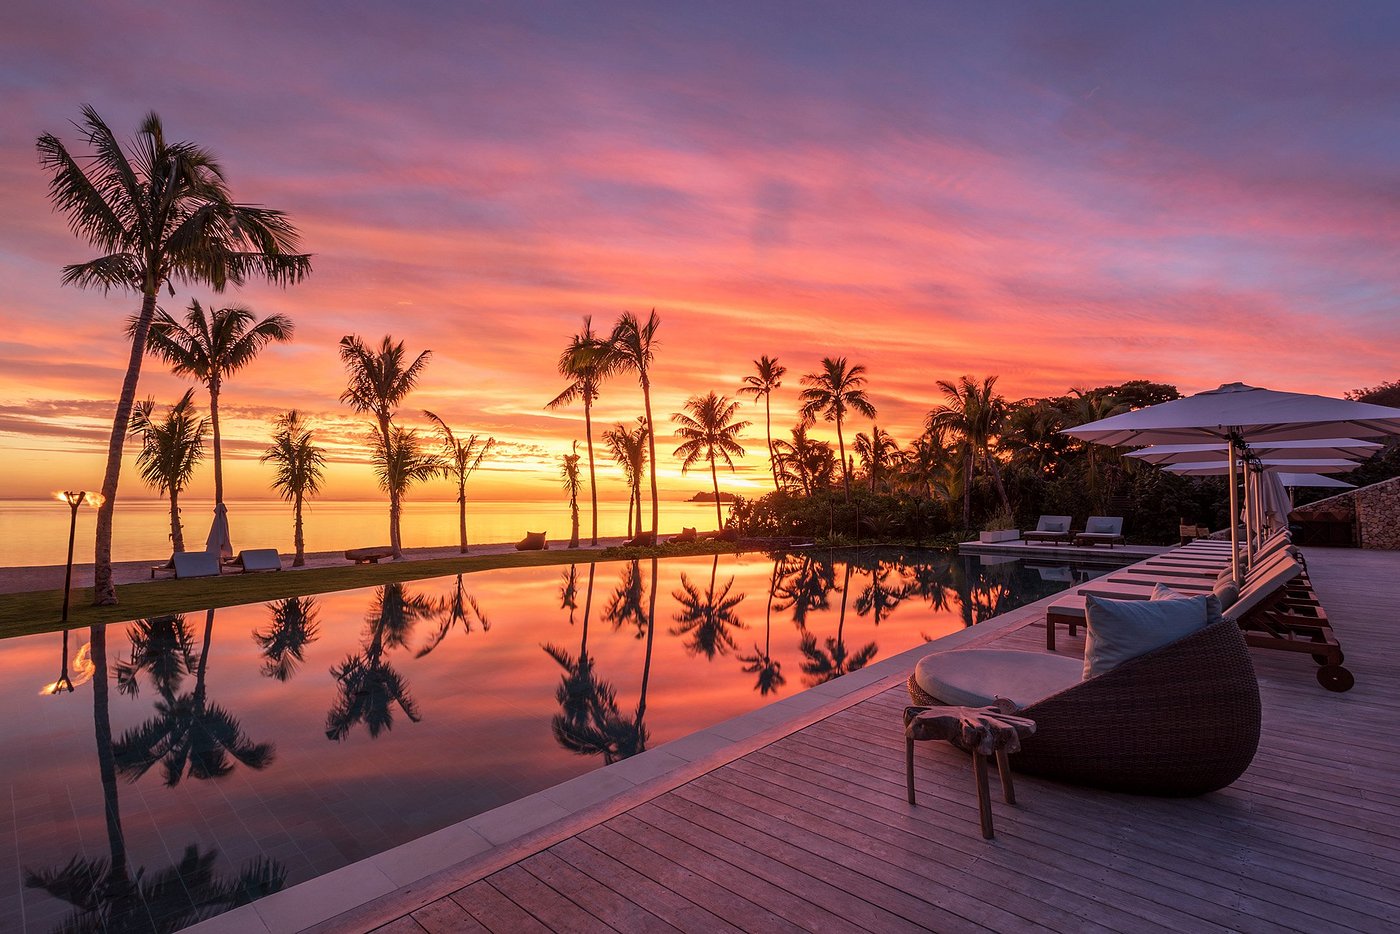 Sunset at the Six Senses Resort - Fiji